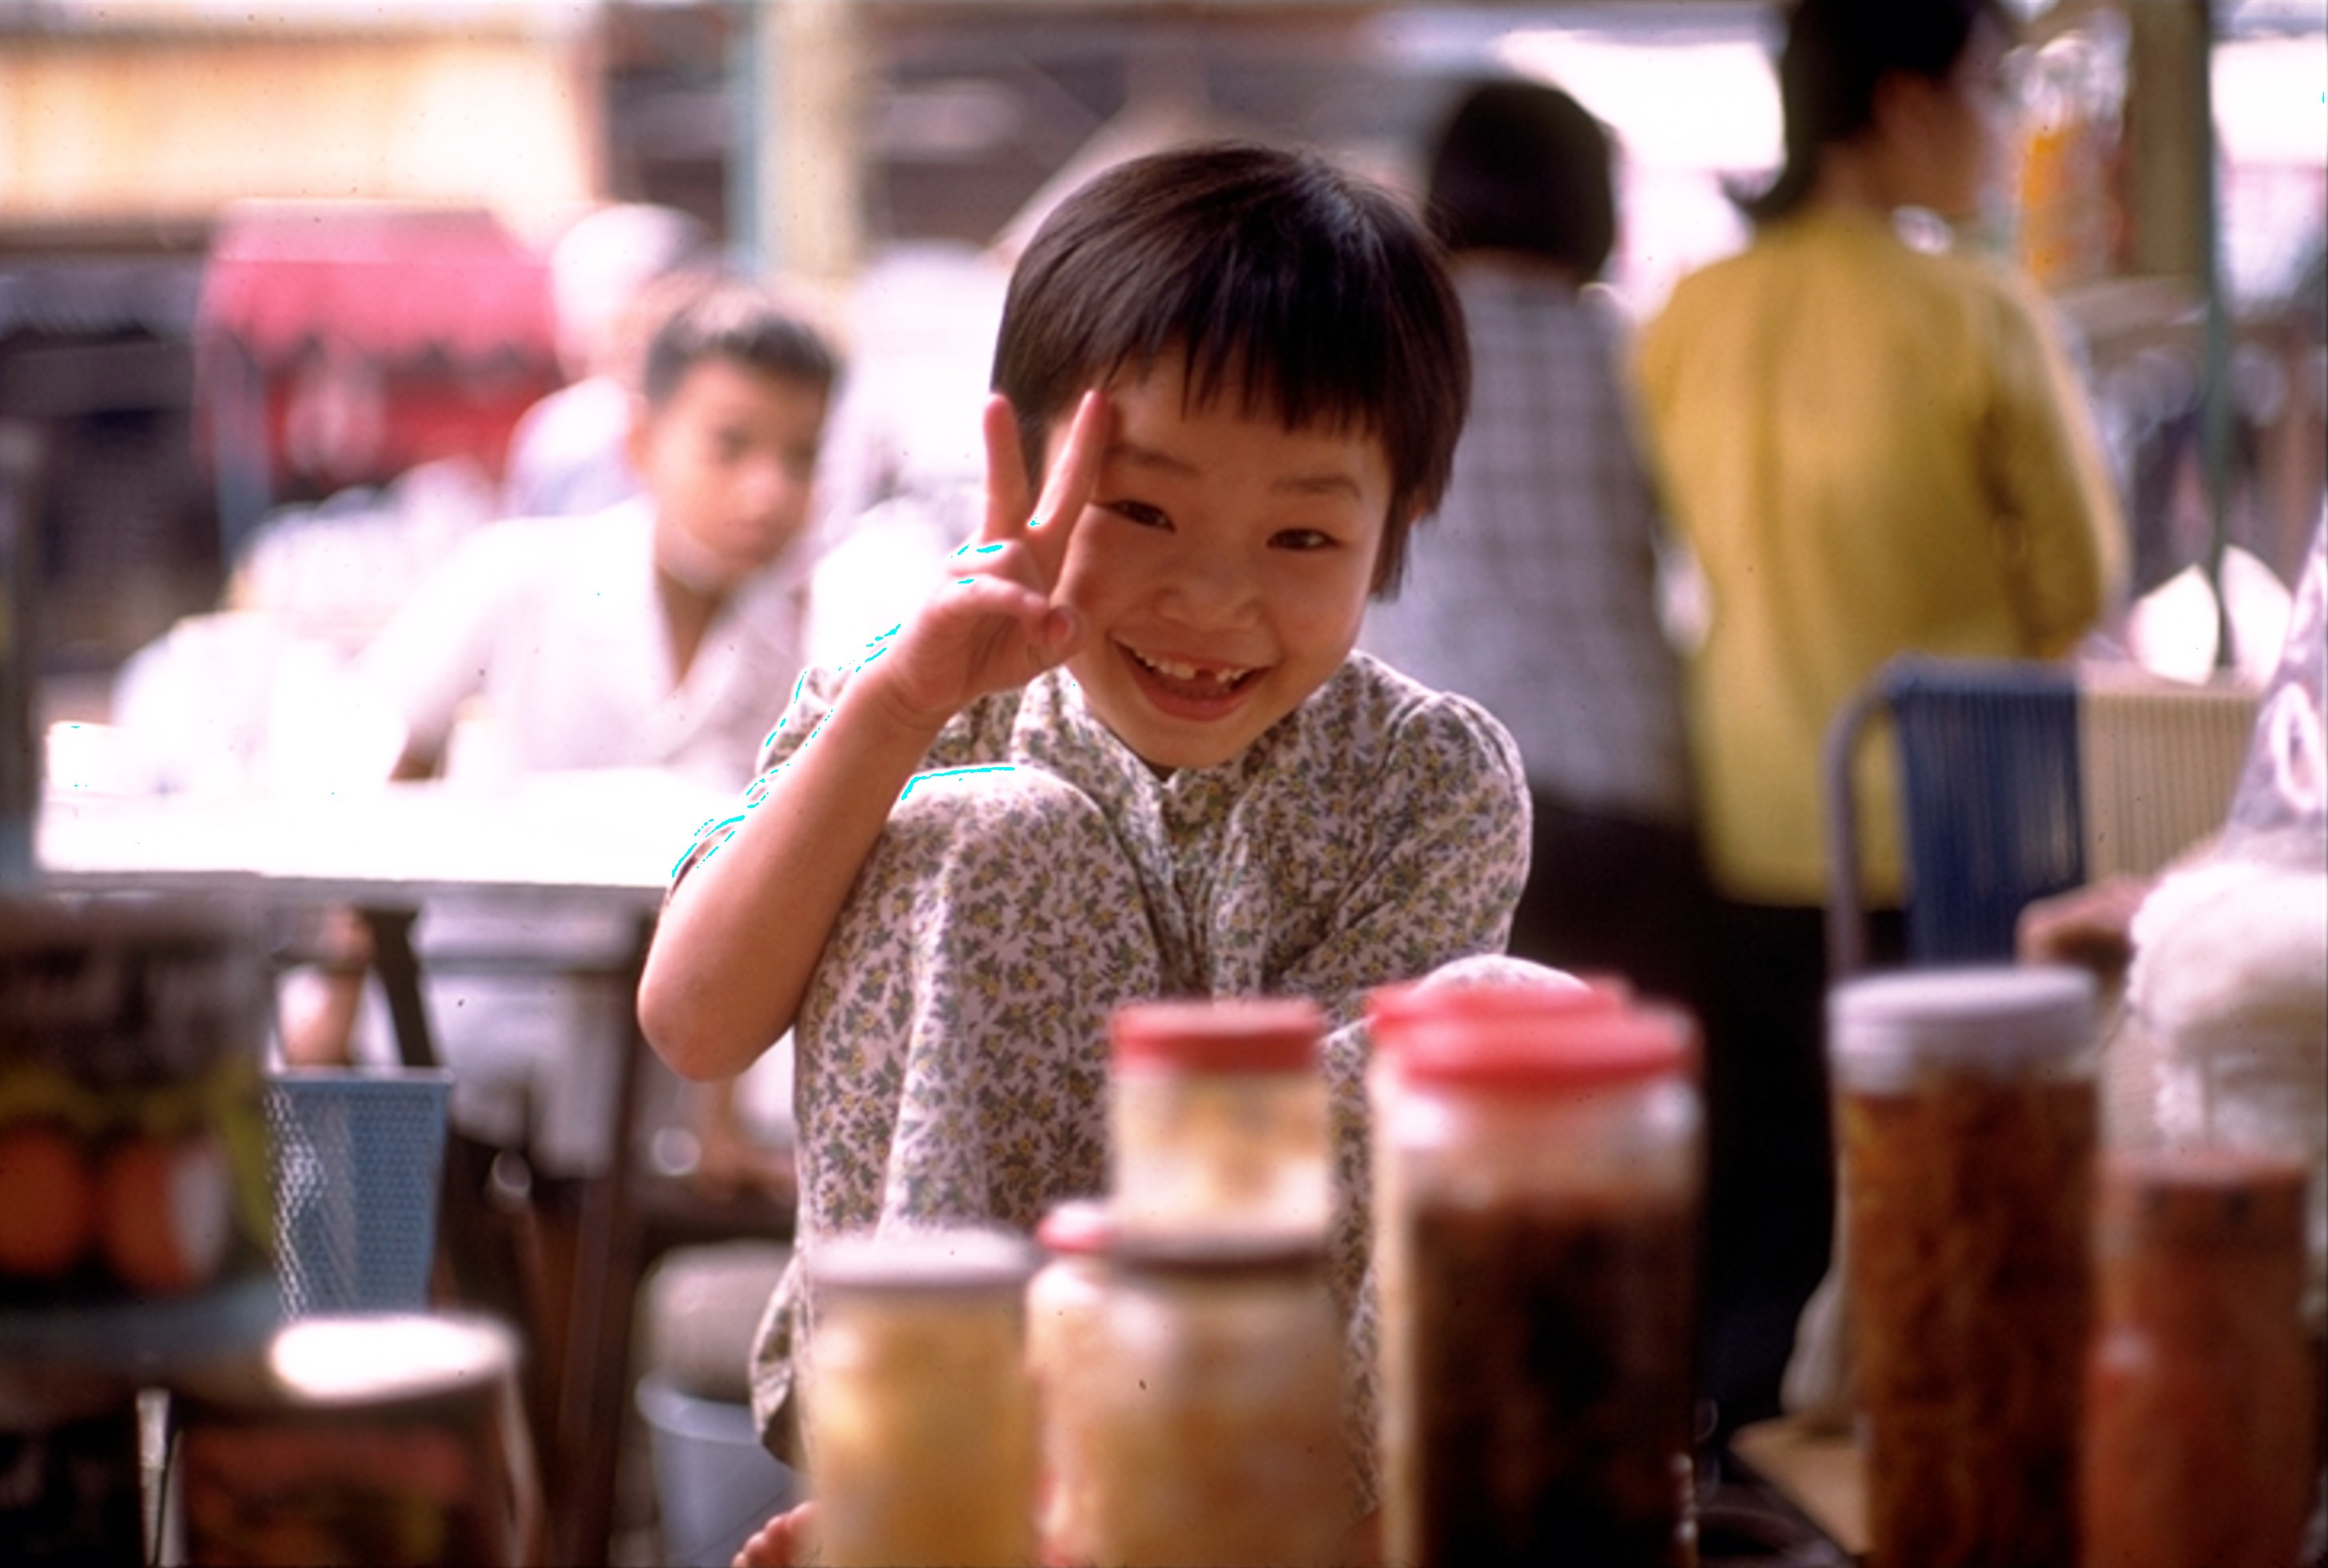 Vietnamese market girl imitating photographer 1970